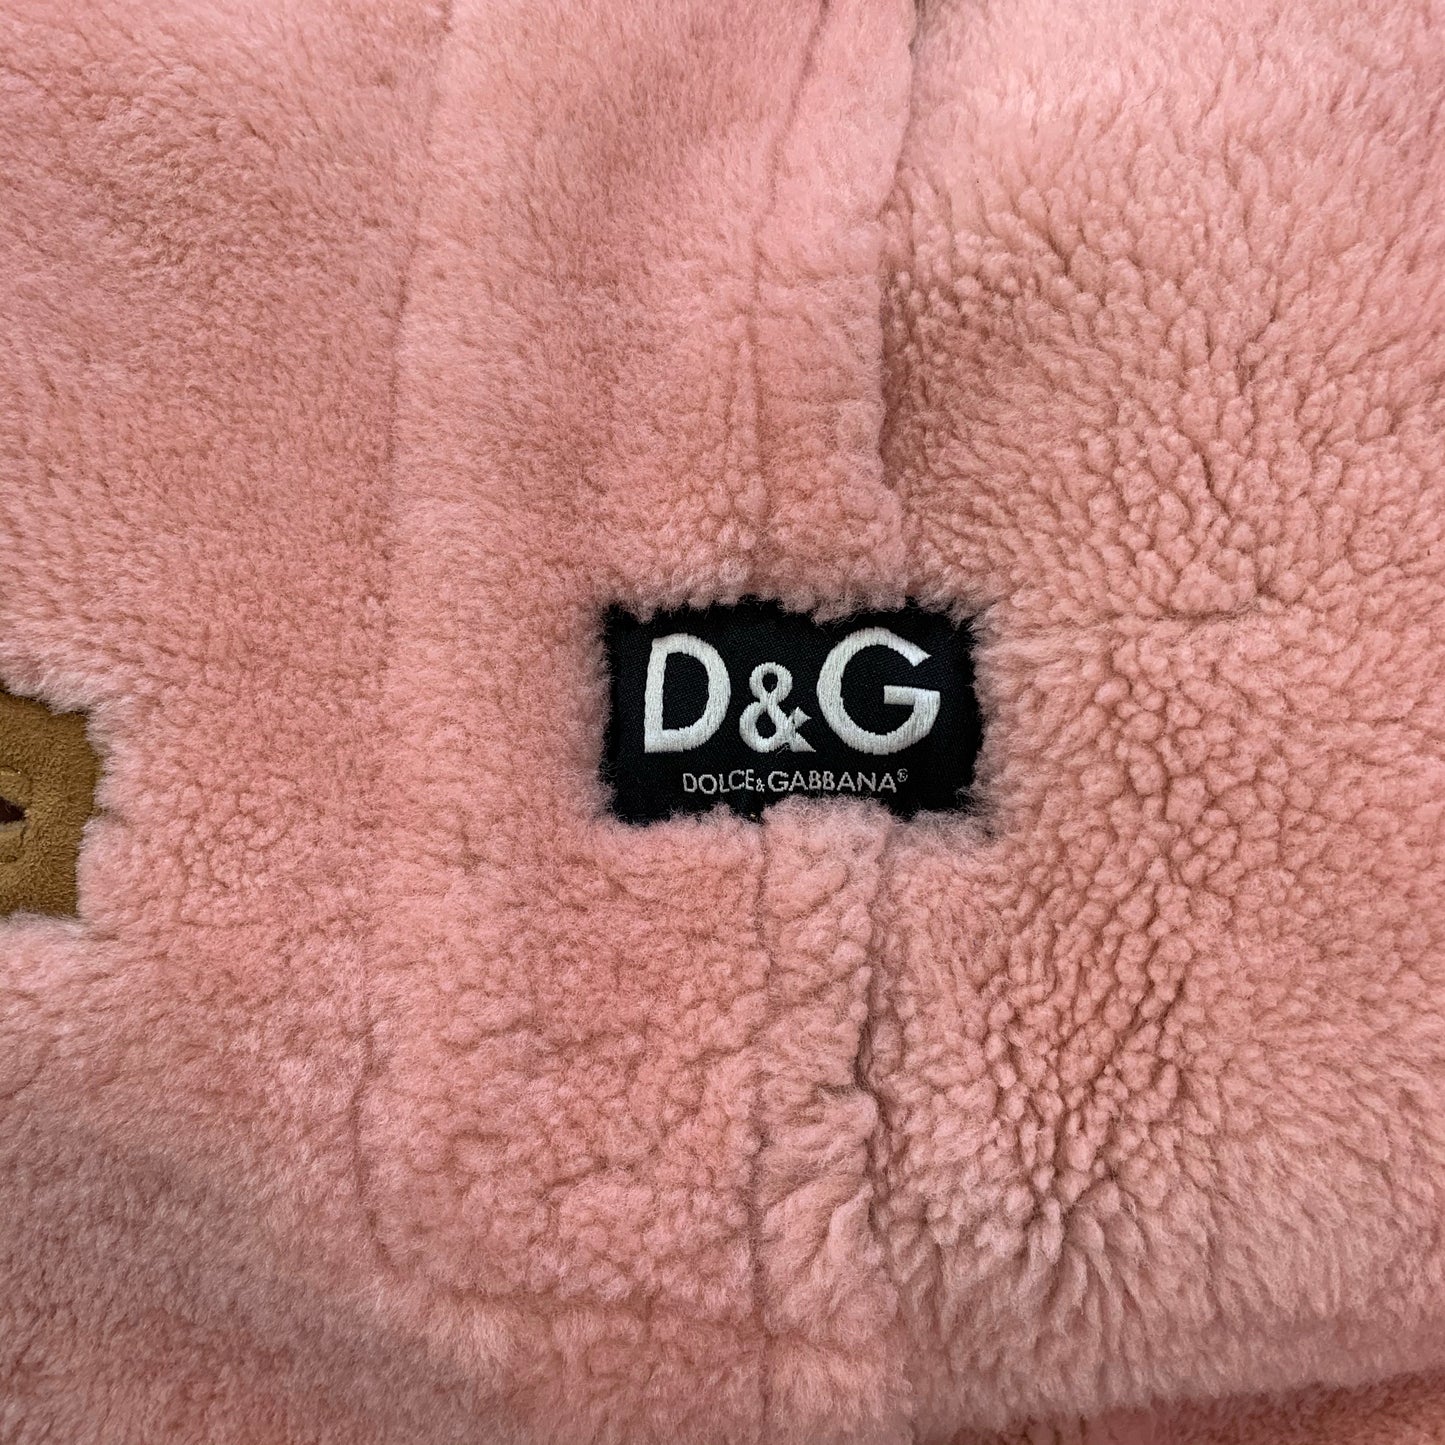 Authentic Dolce & Gabbana Tan/Pink Shearling Coat Sz S